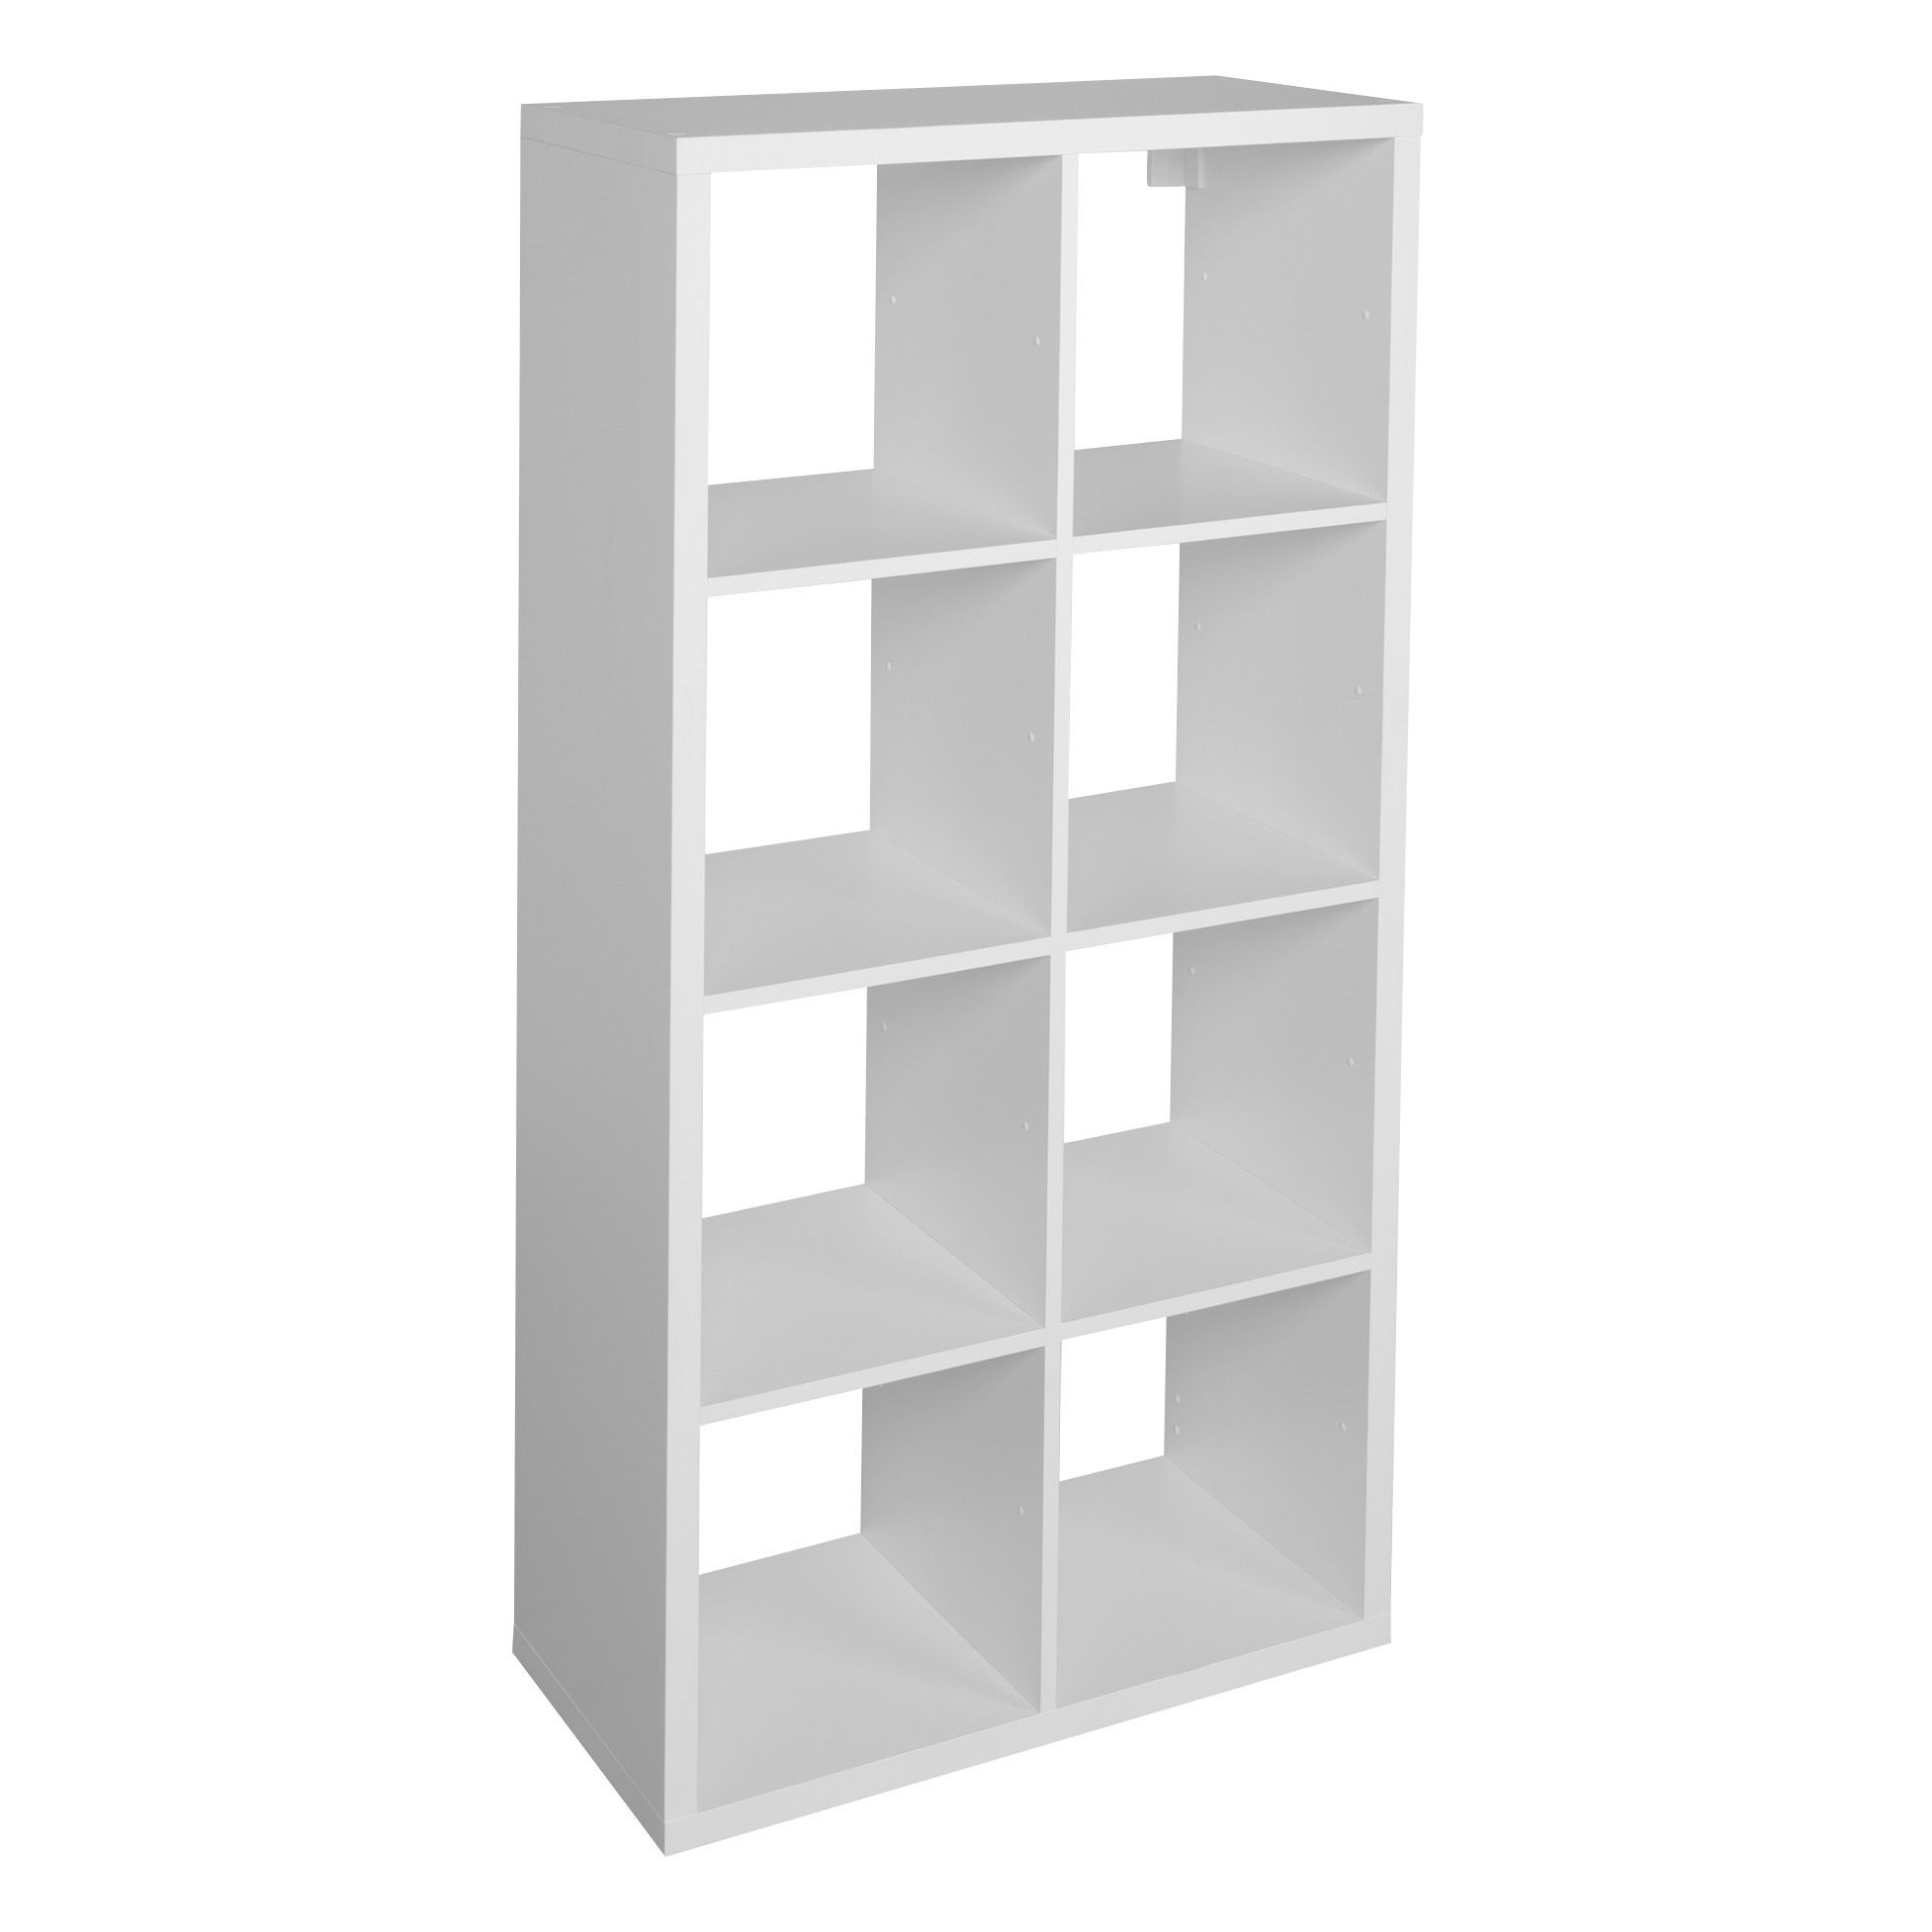 Form Mixxit Matt white Freestanding 8 shelf Cube Shelving unit, (H)1420mm (W)740mm